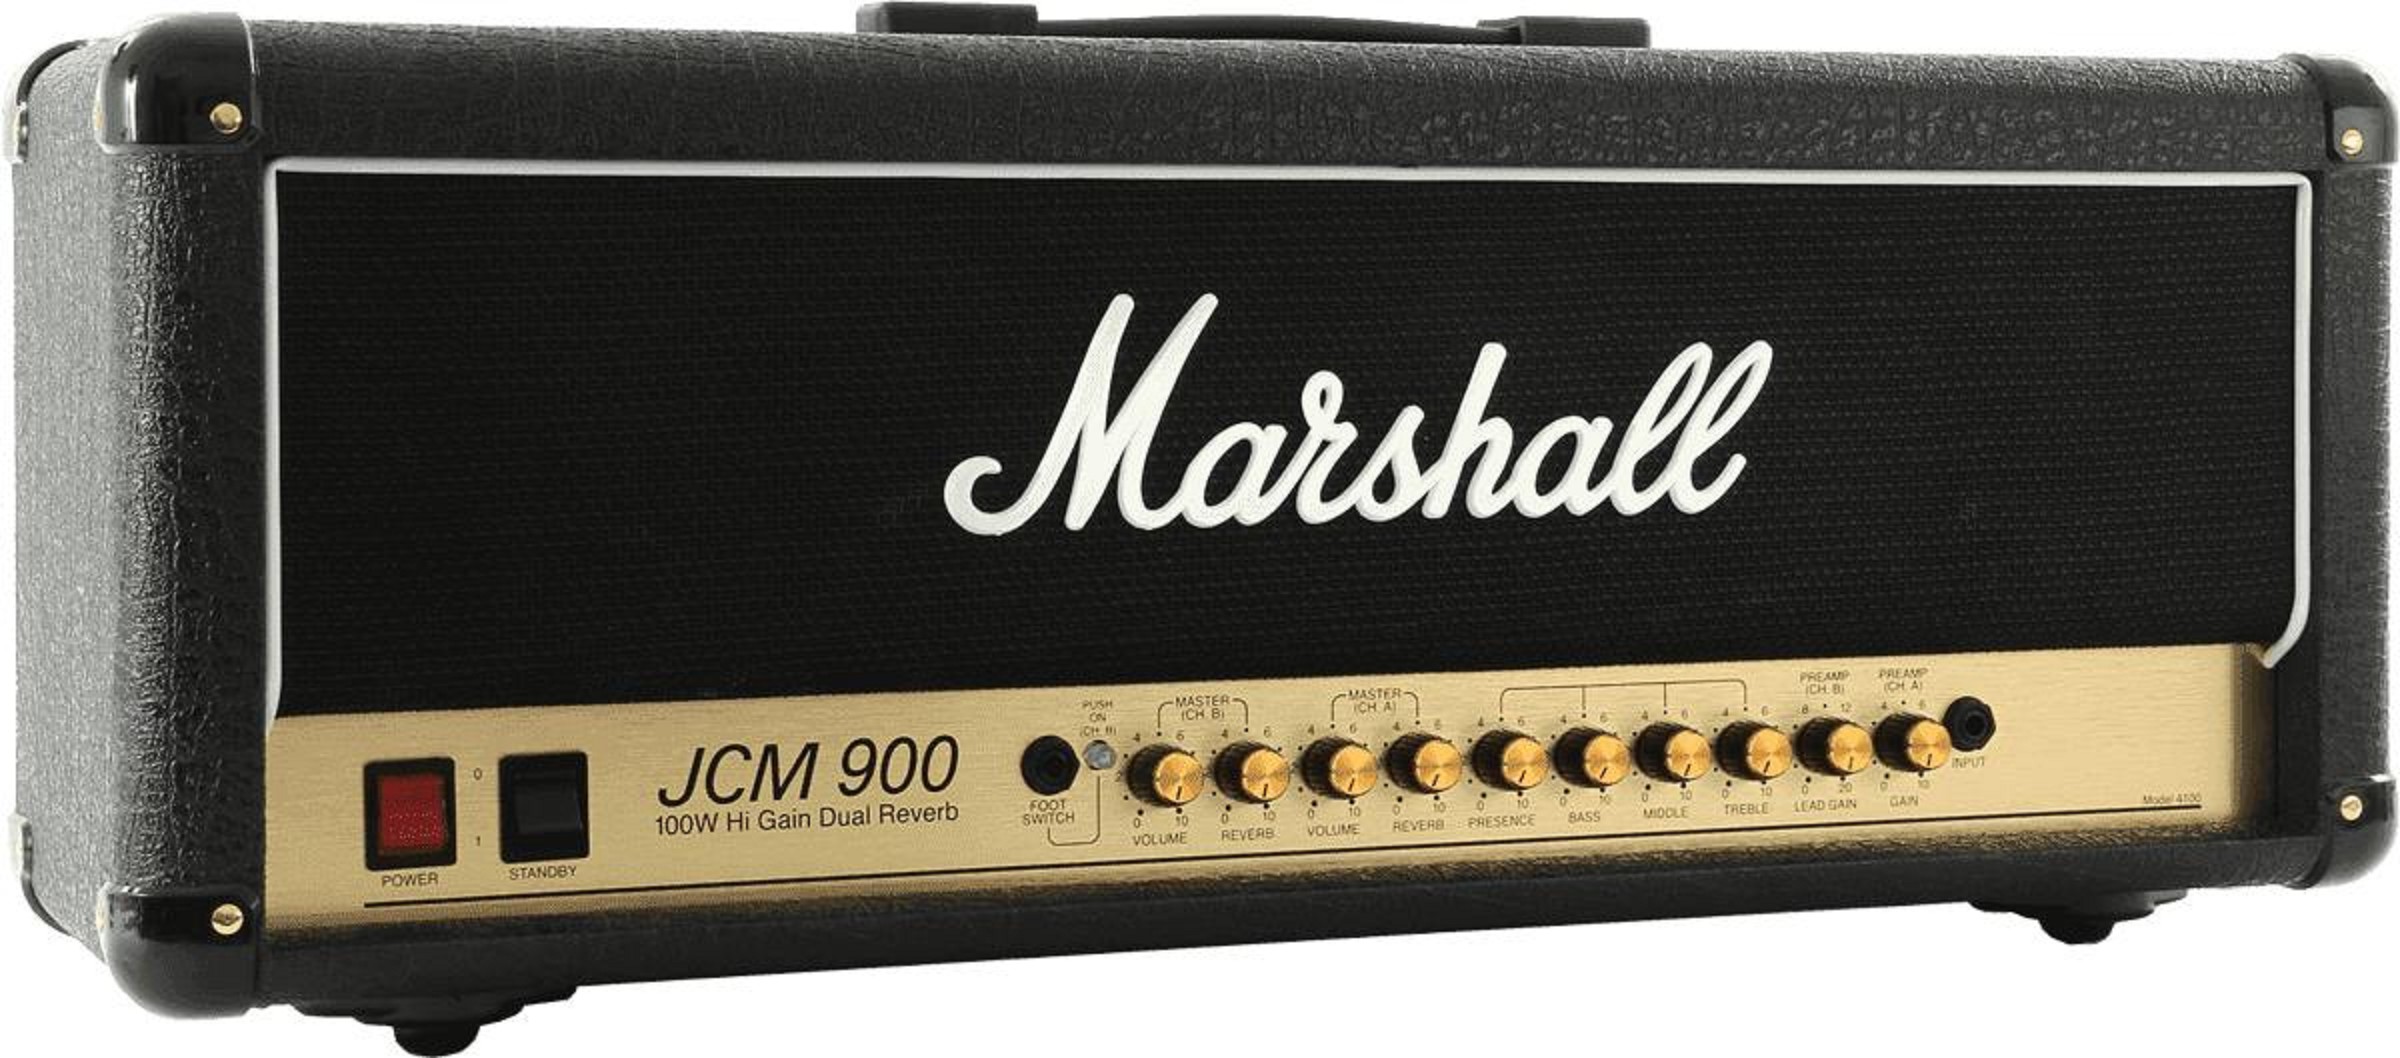 MARSHALL JCM 900 Head 100W